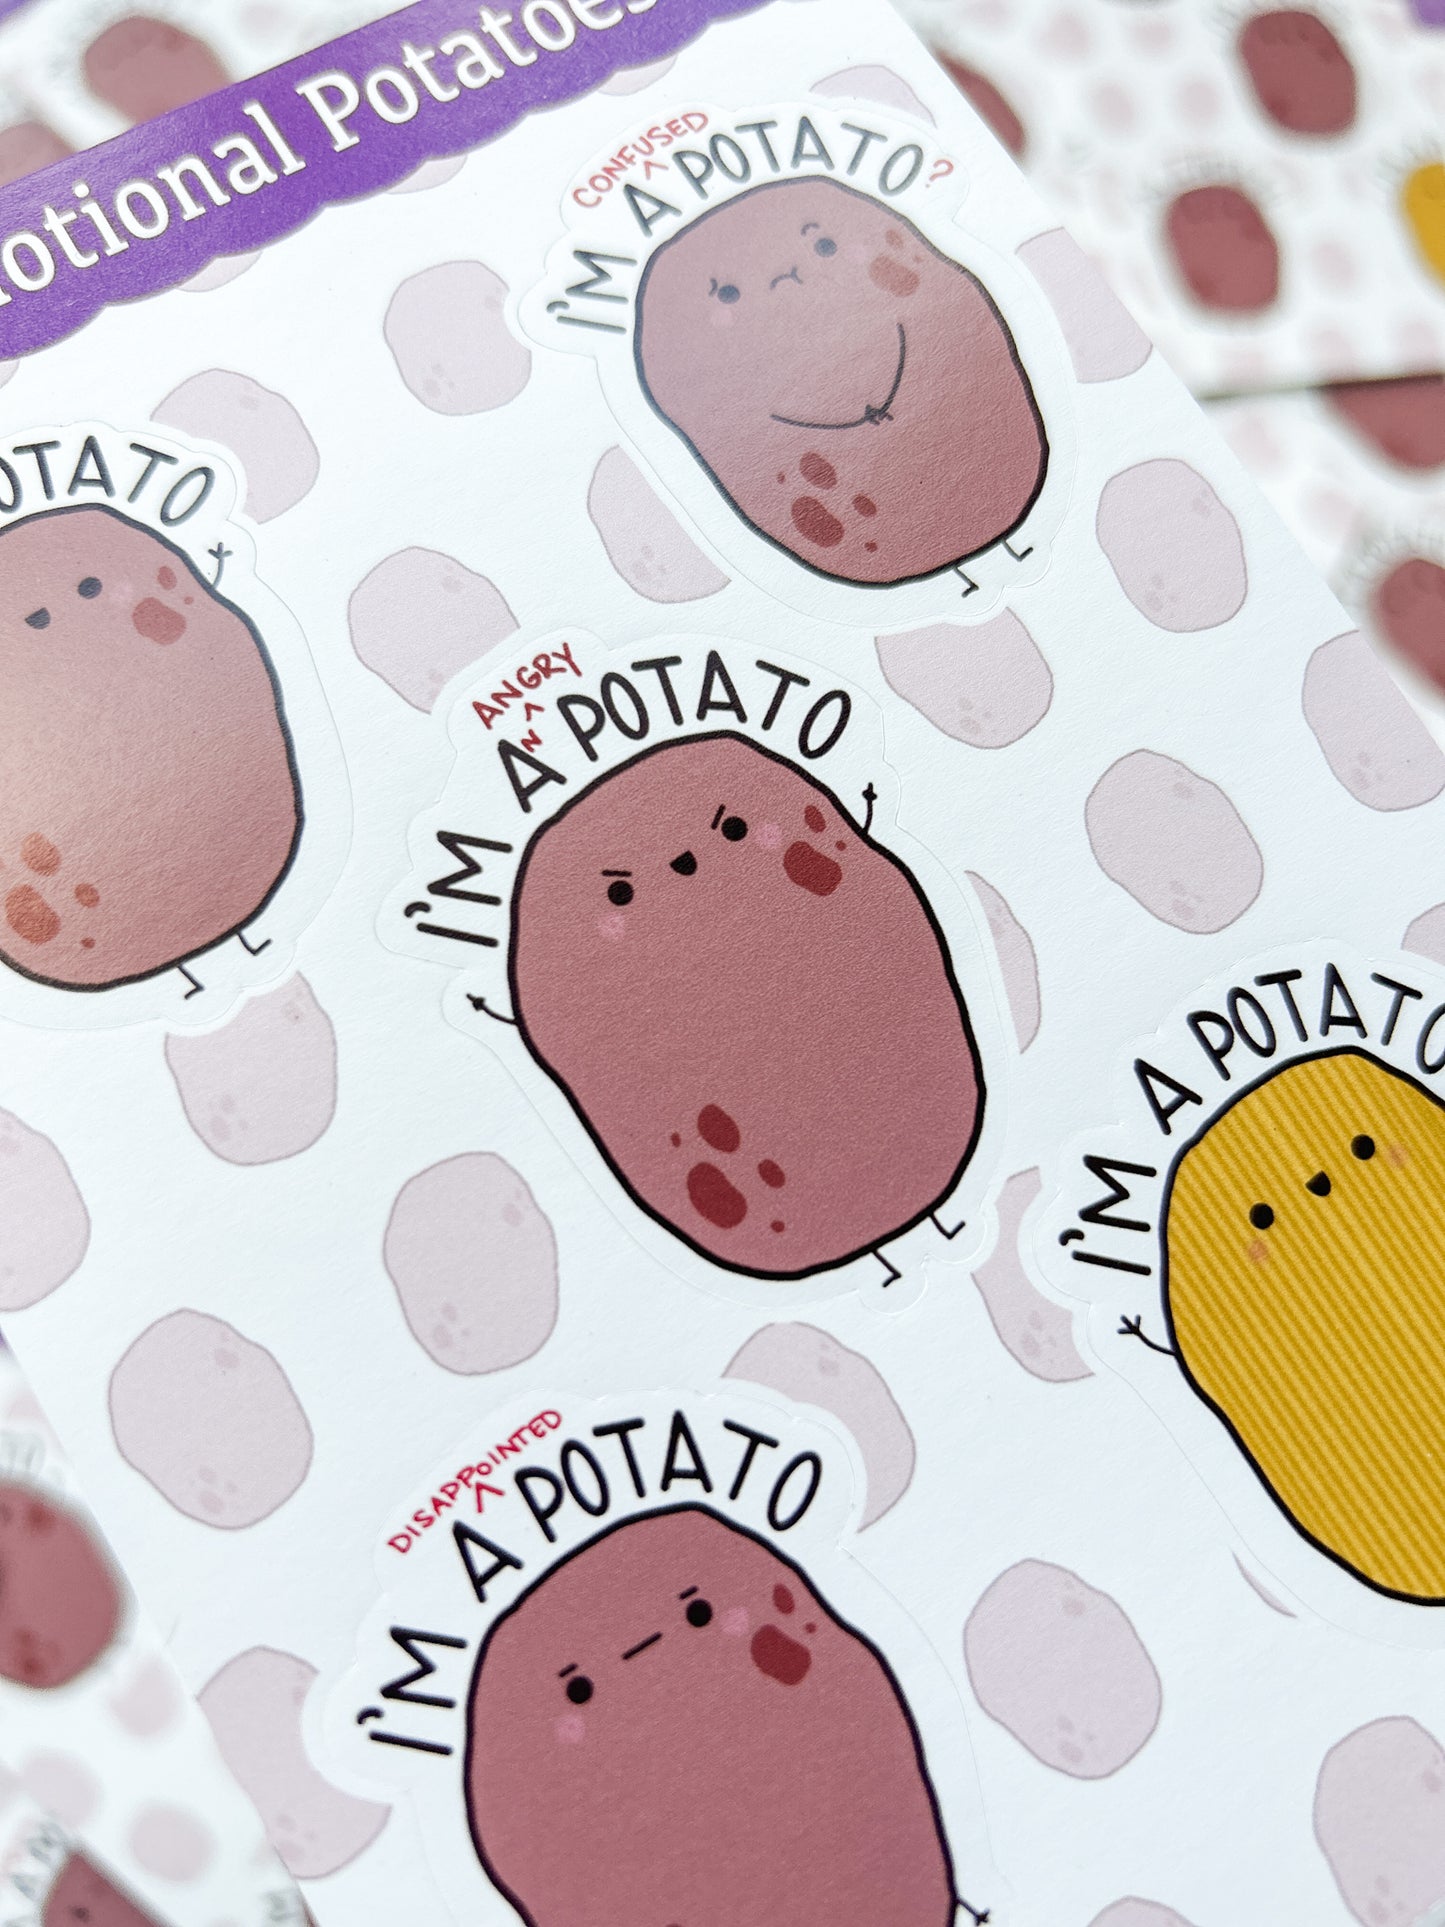 Emotional Potatoes Sticker Sheet